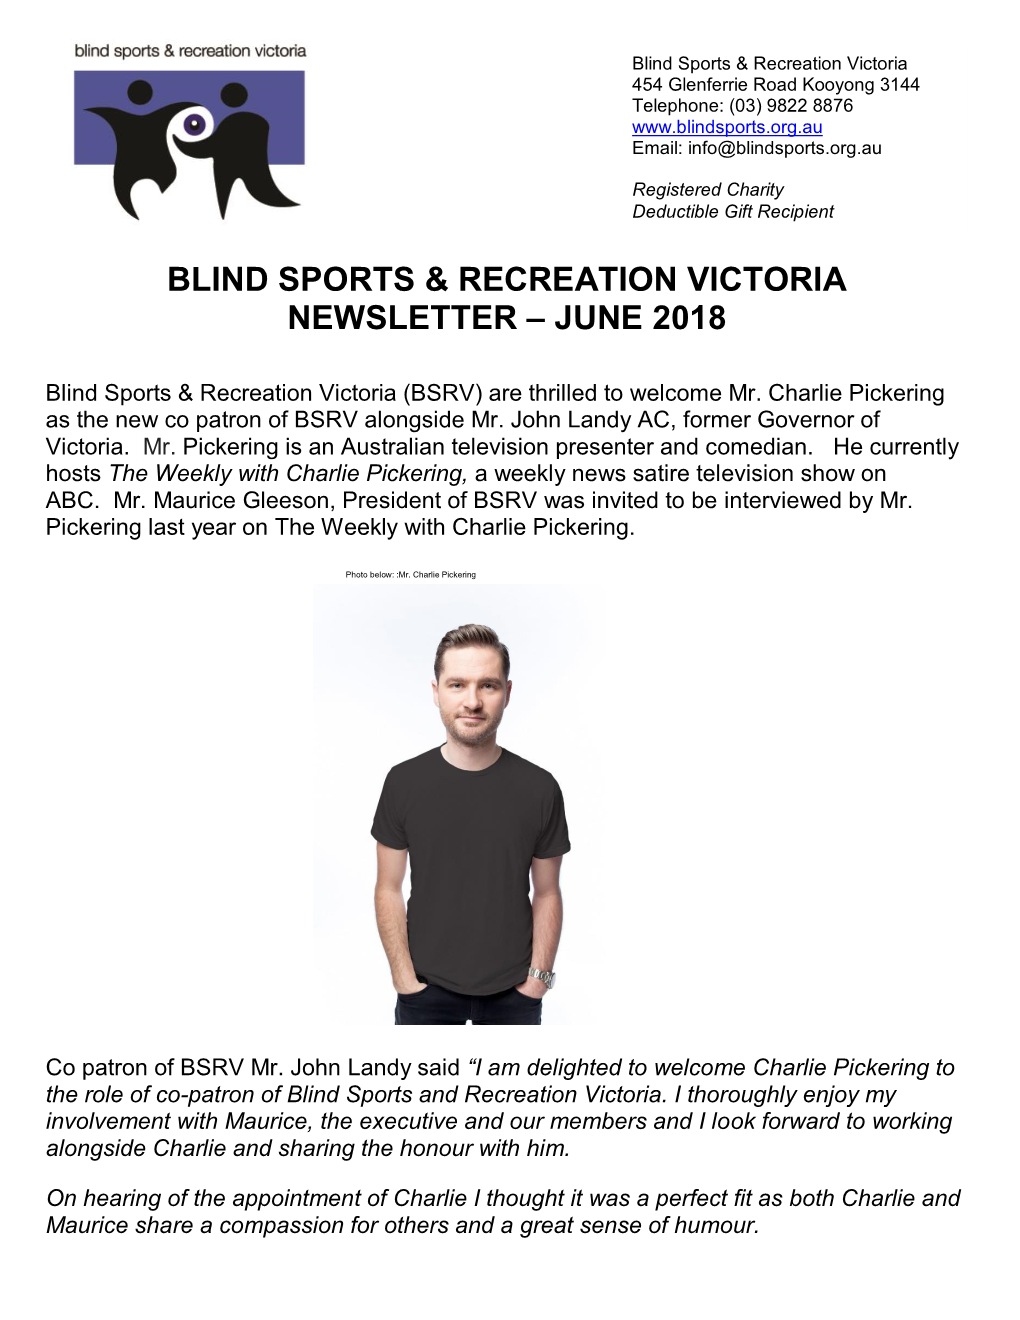 Blind Sports & Recreation Victoria Newsletter June 2018